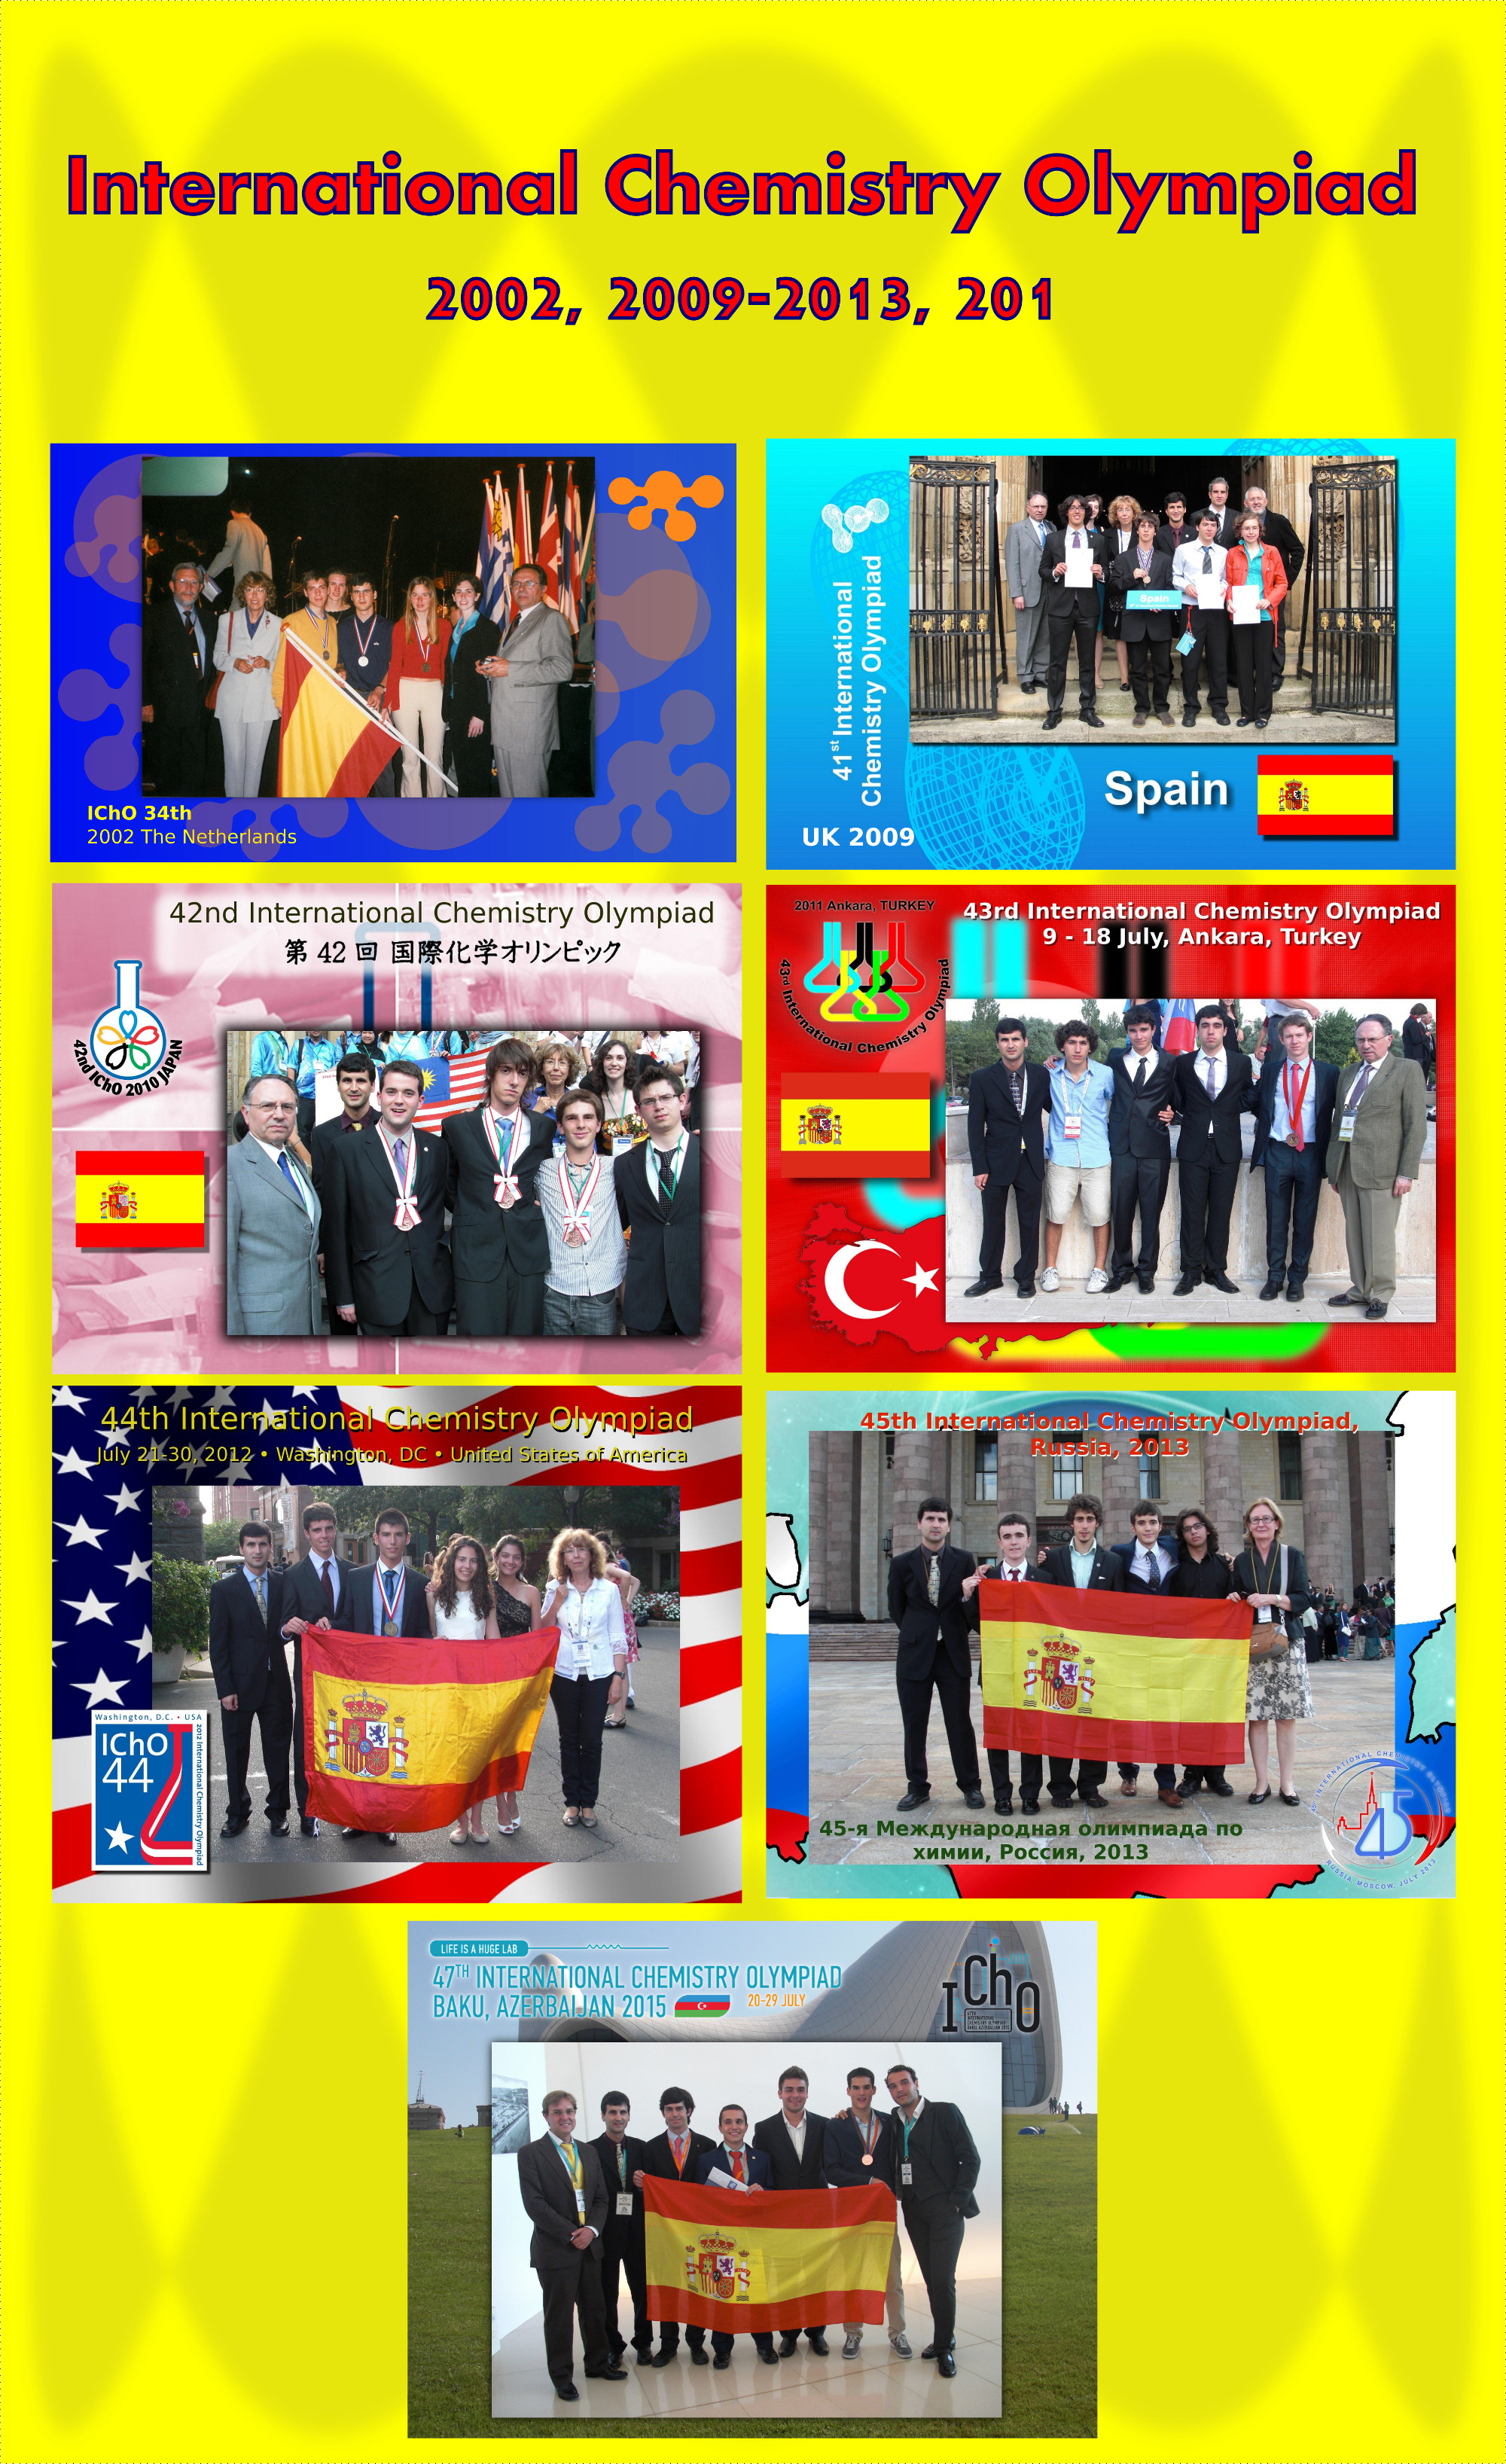 IChO Spanish Team